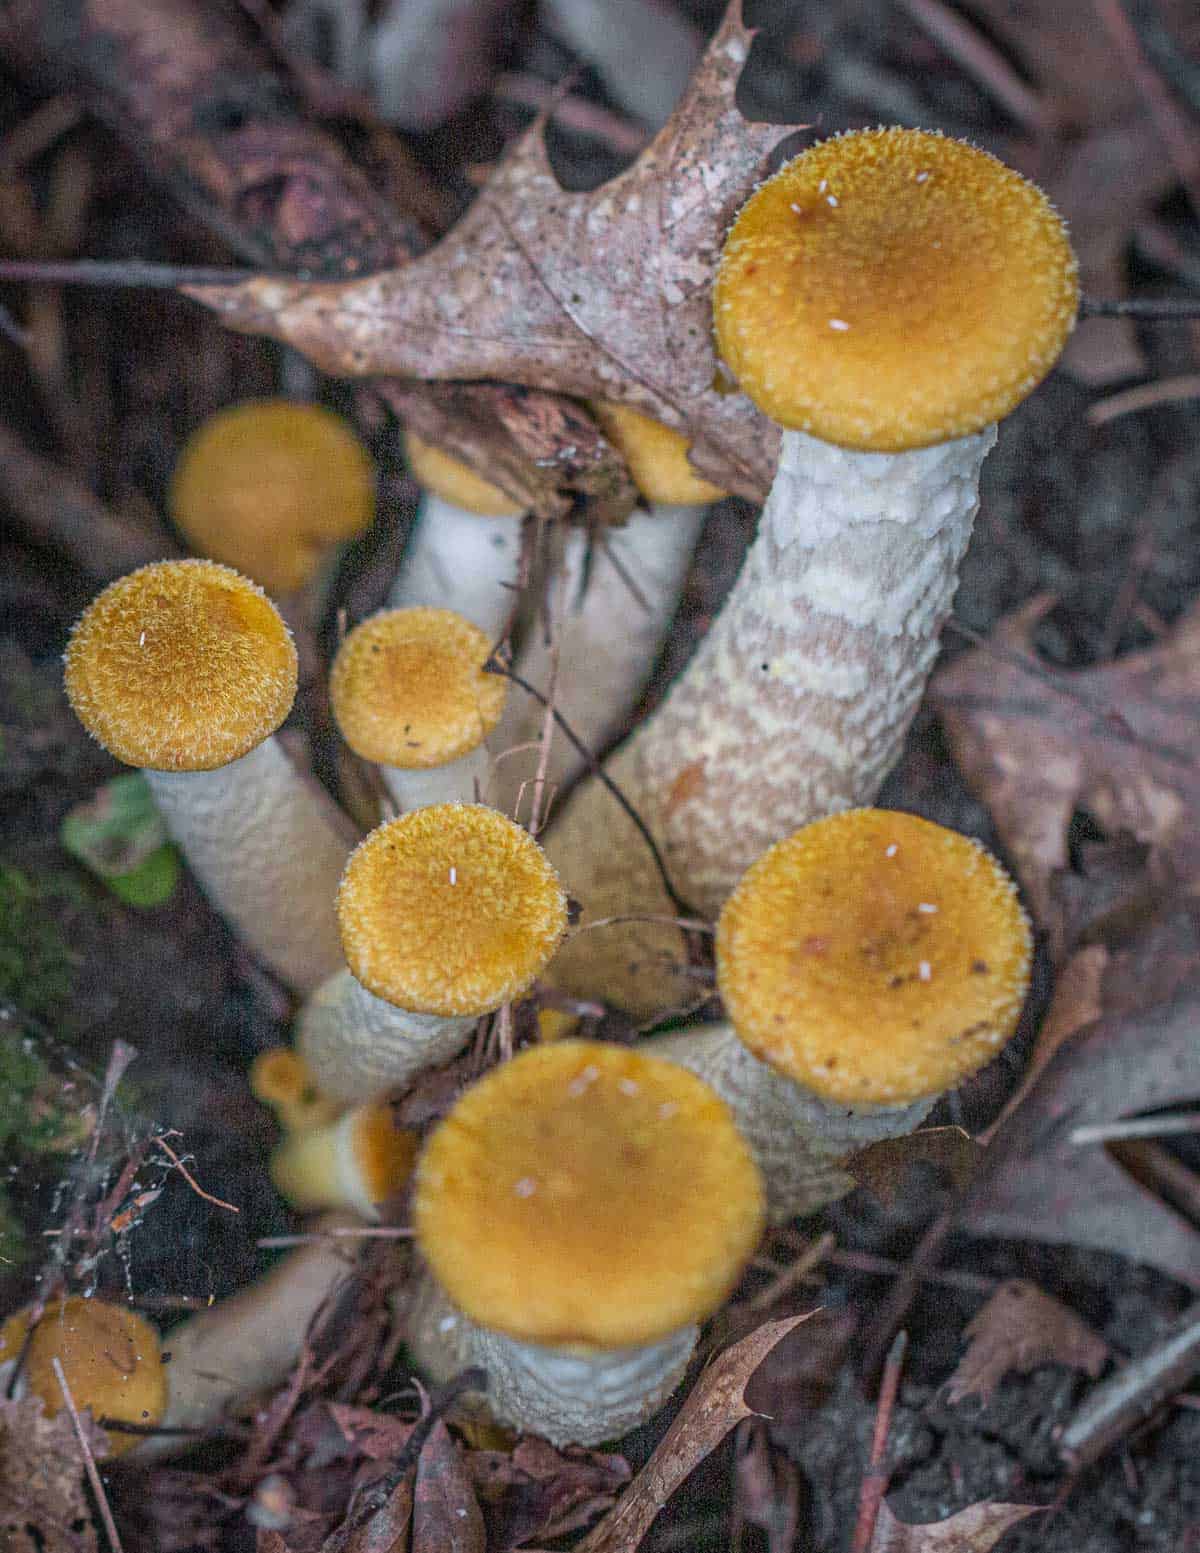 Honey mushrooms or Armillaria mellea. 